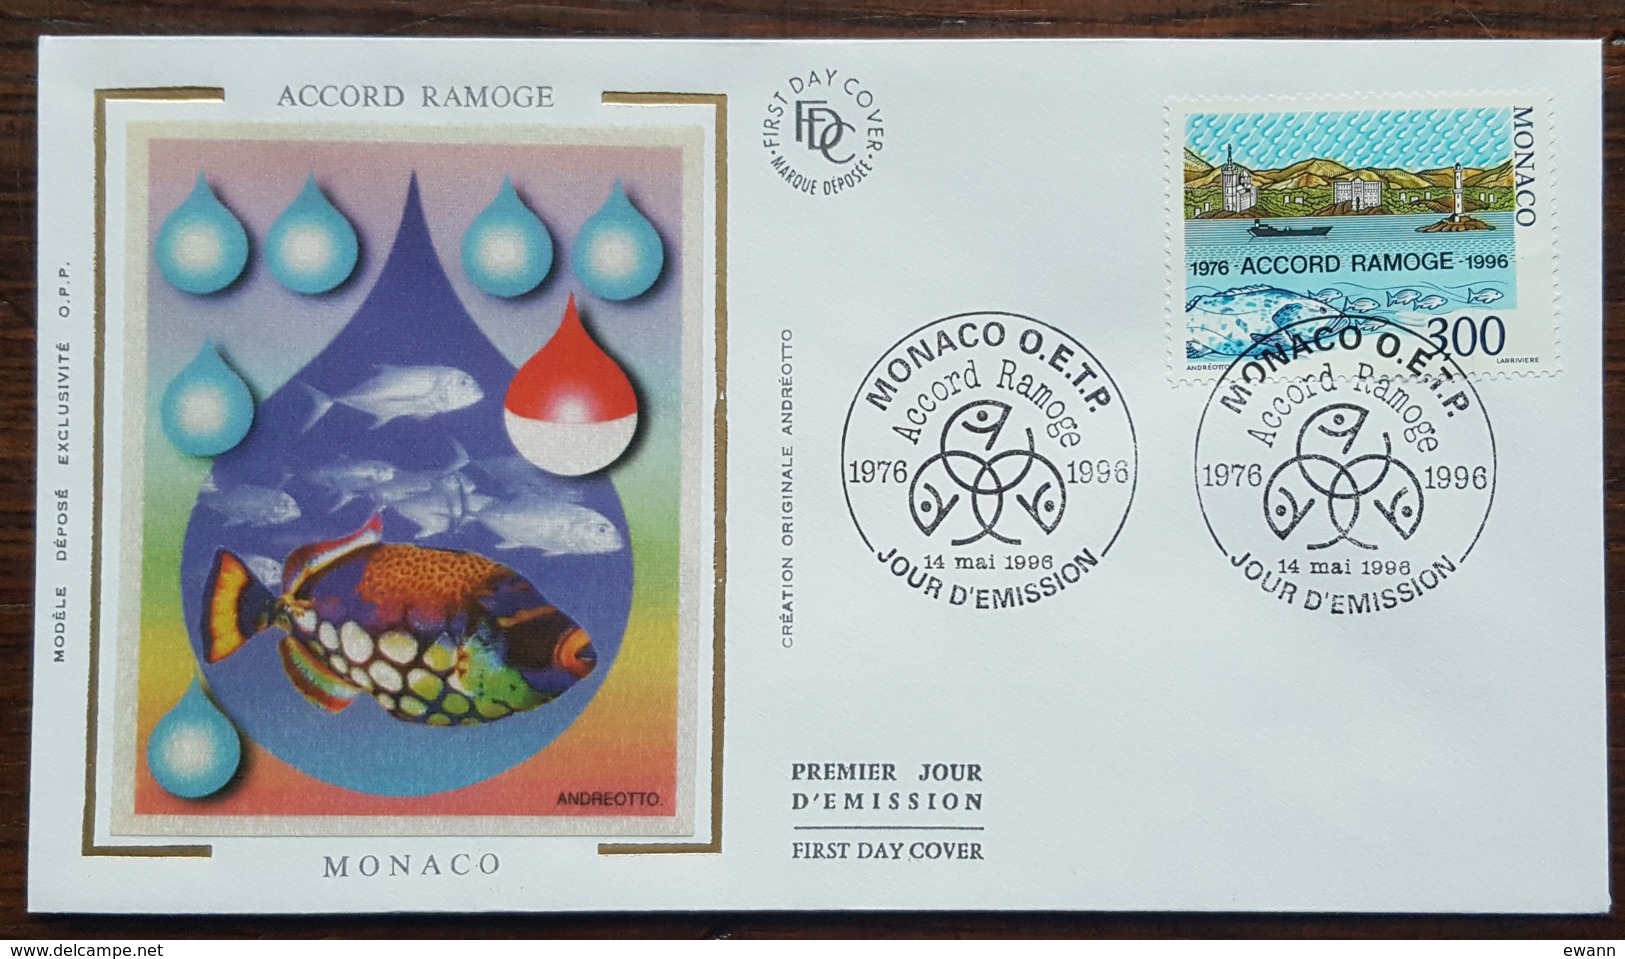 Monaco - FDC 1996 - YT N°2038 - ACCORD RAMOGE - FDC